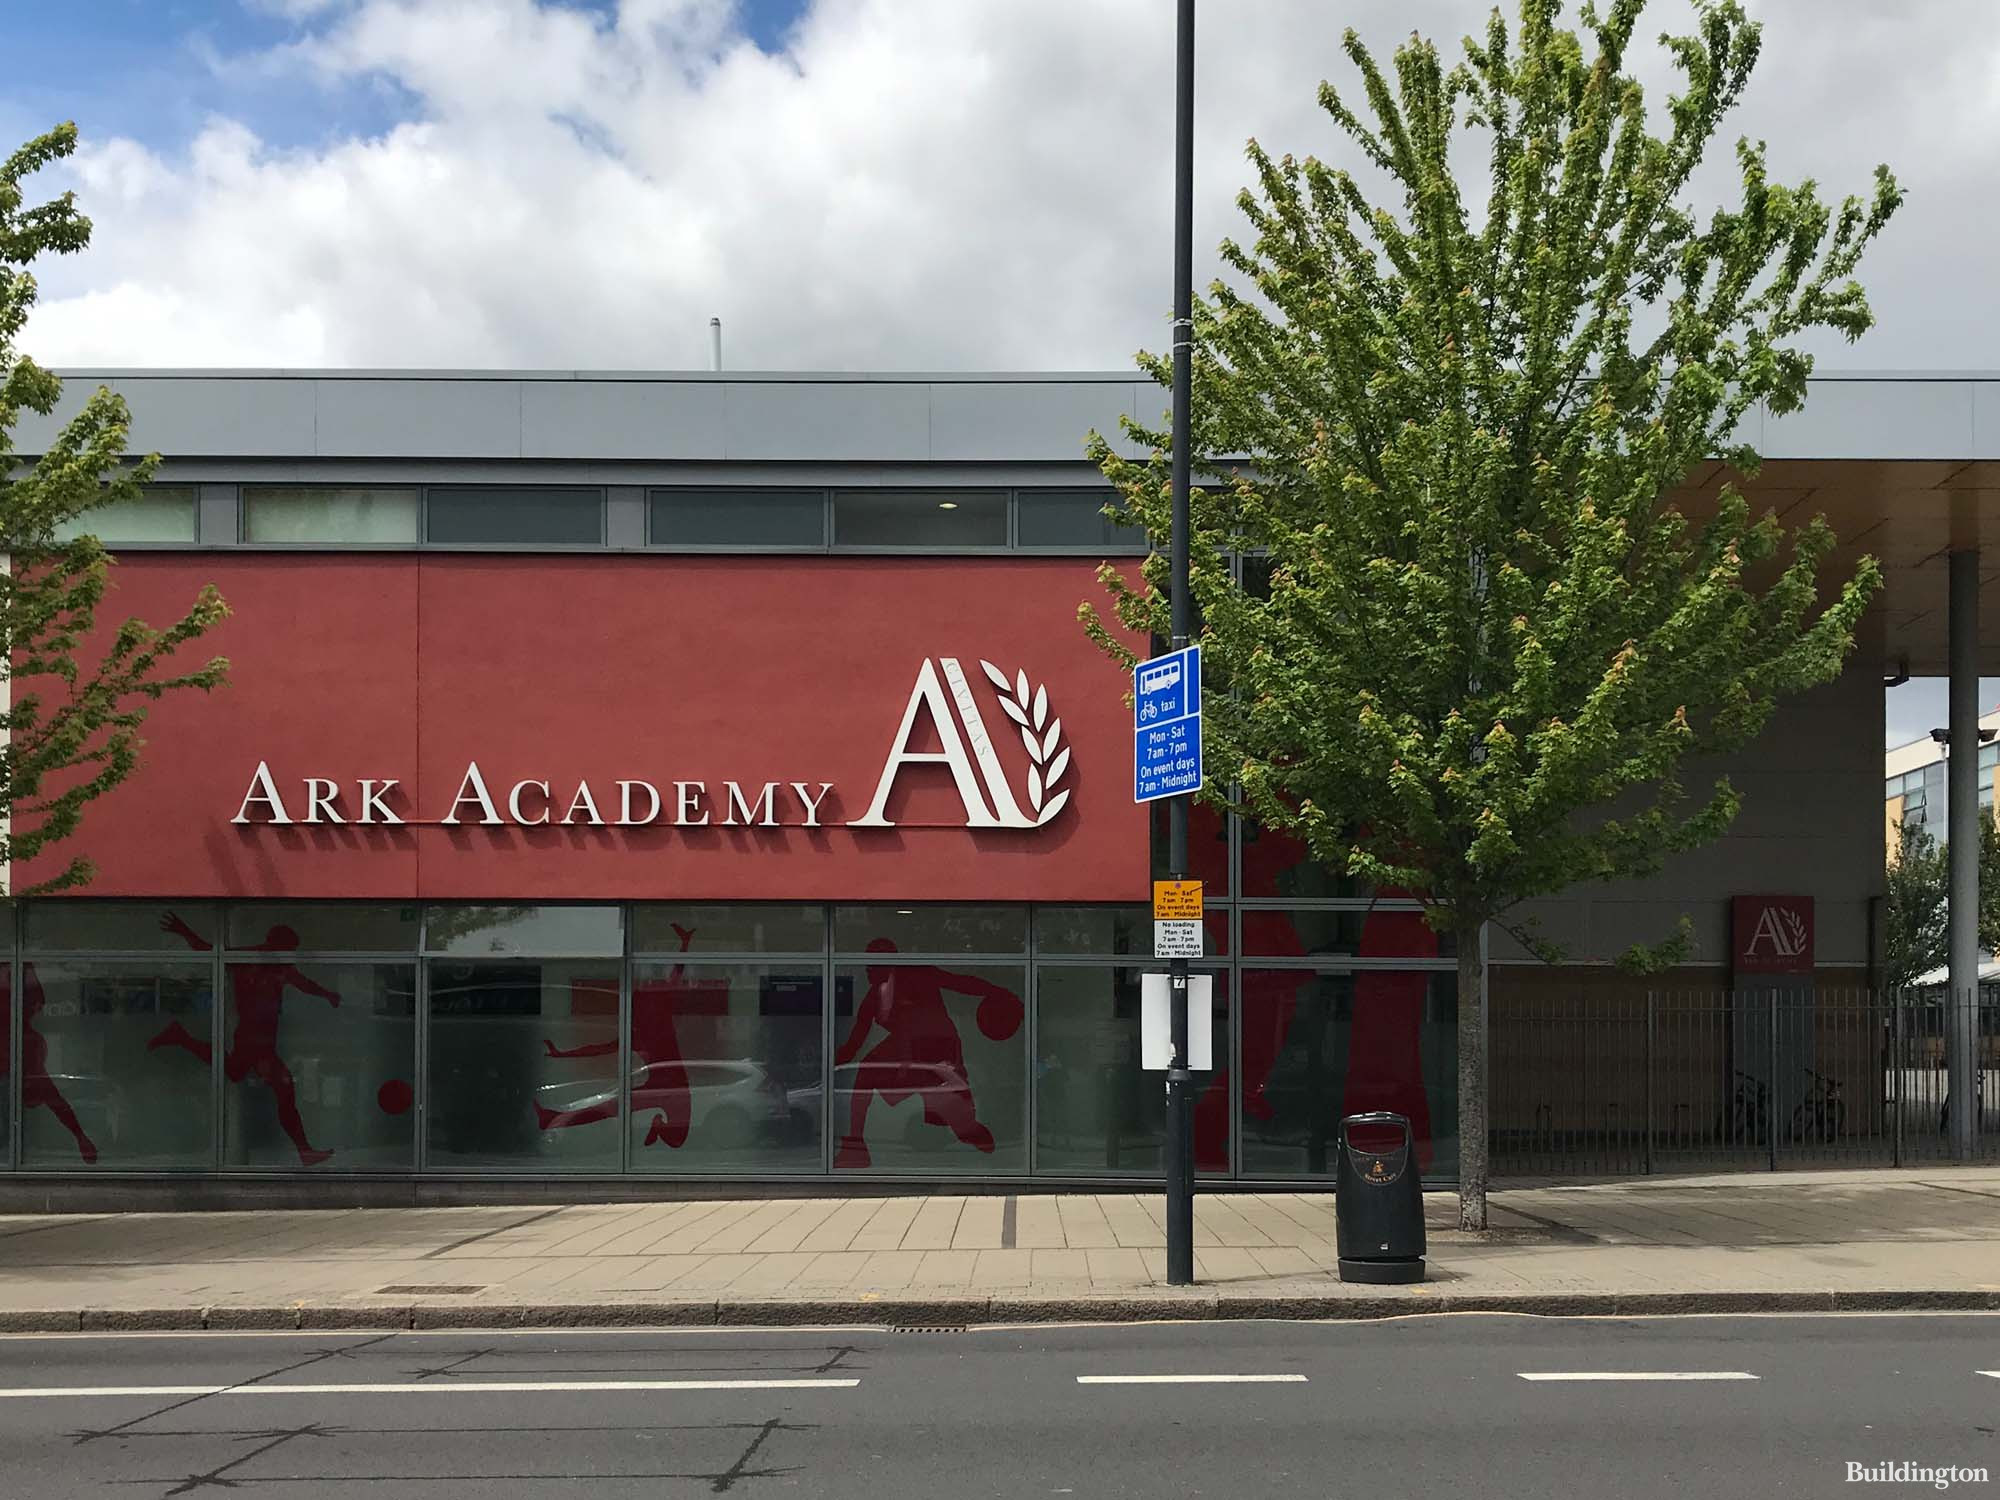 Ark Academy school building on Bridge Road in Wembley. 